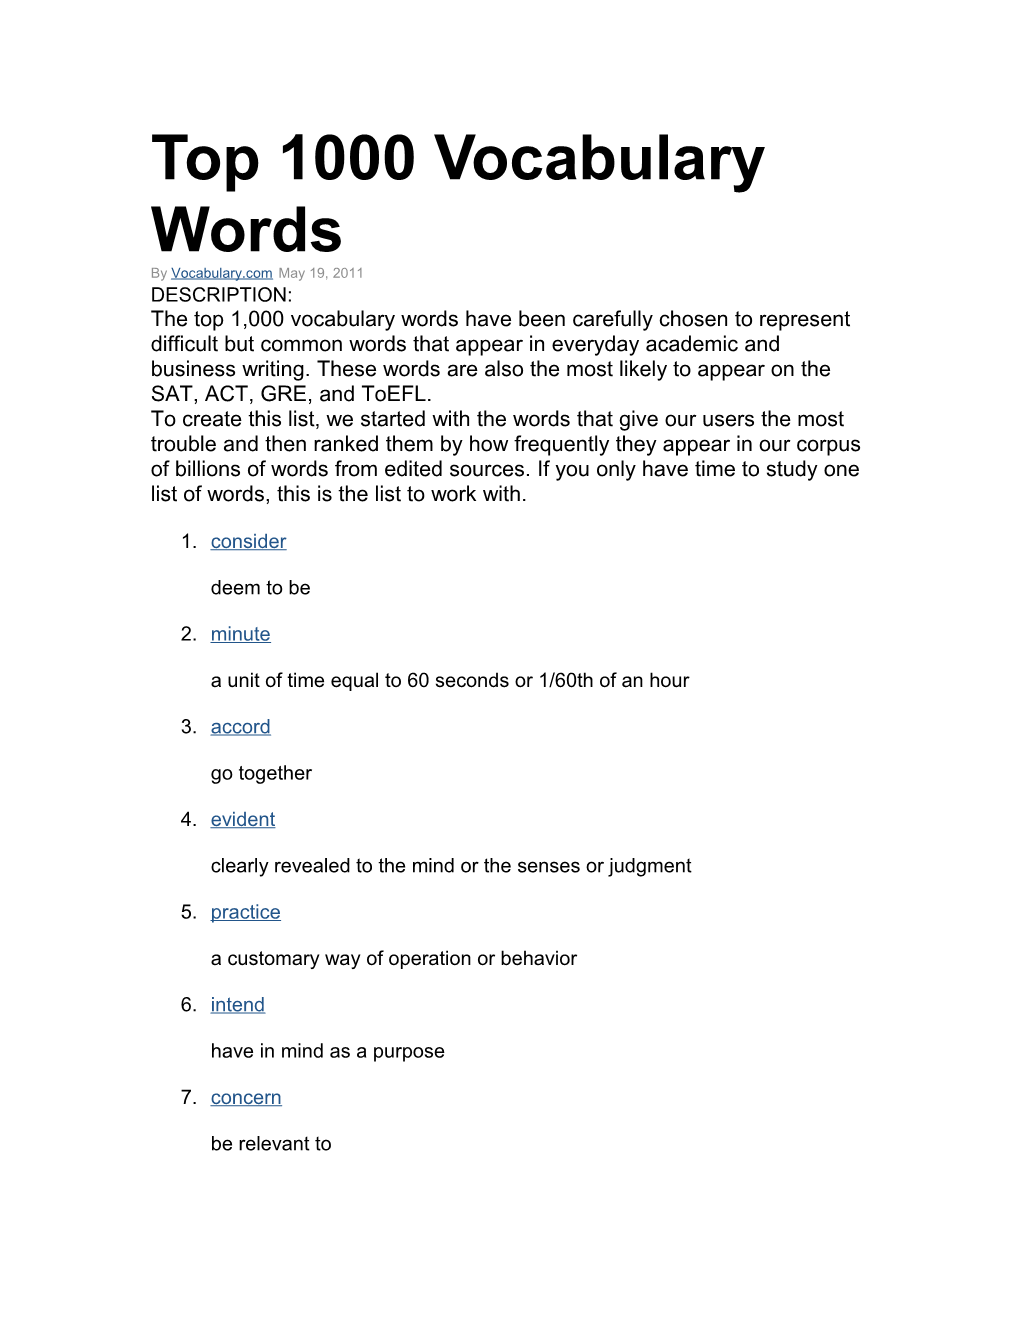 Top 1000 Vocabulary Words